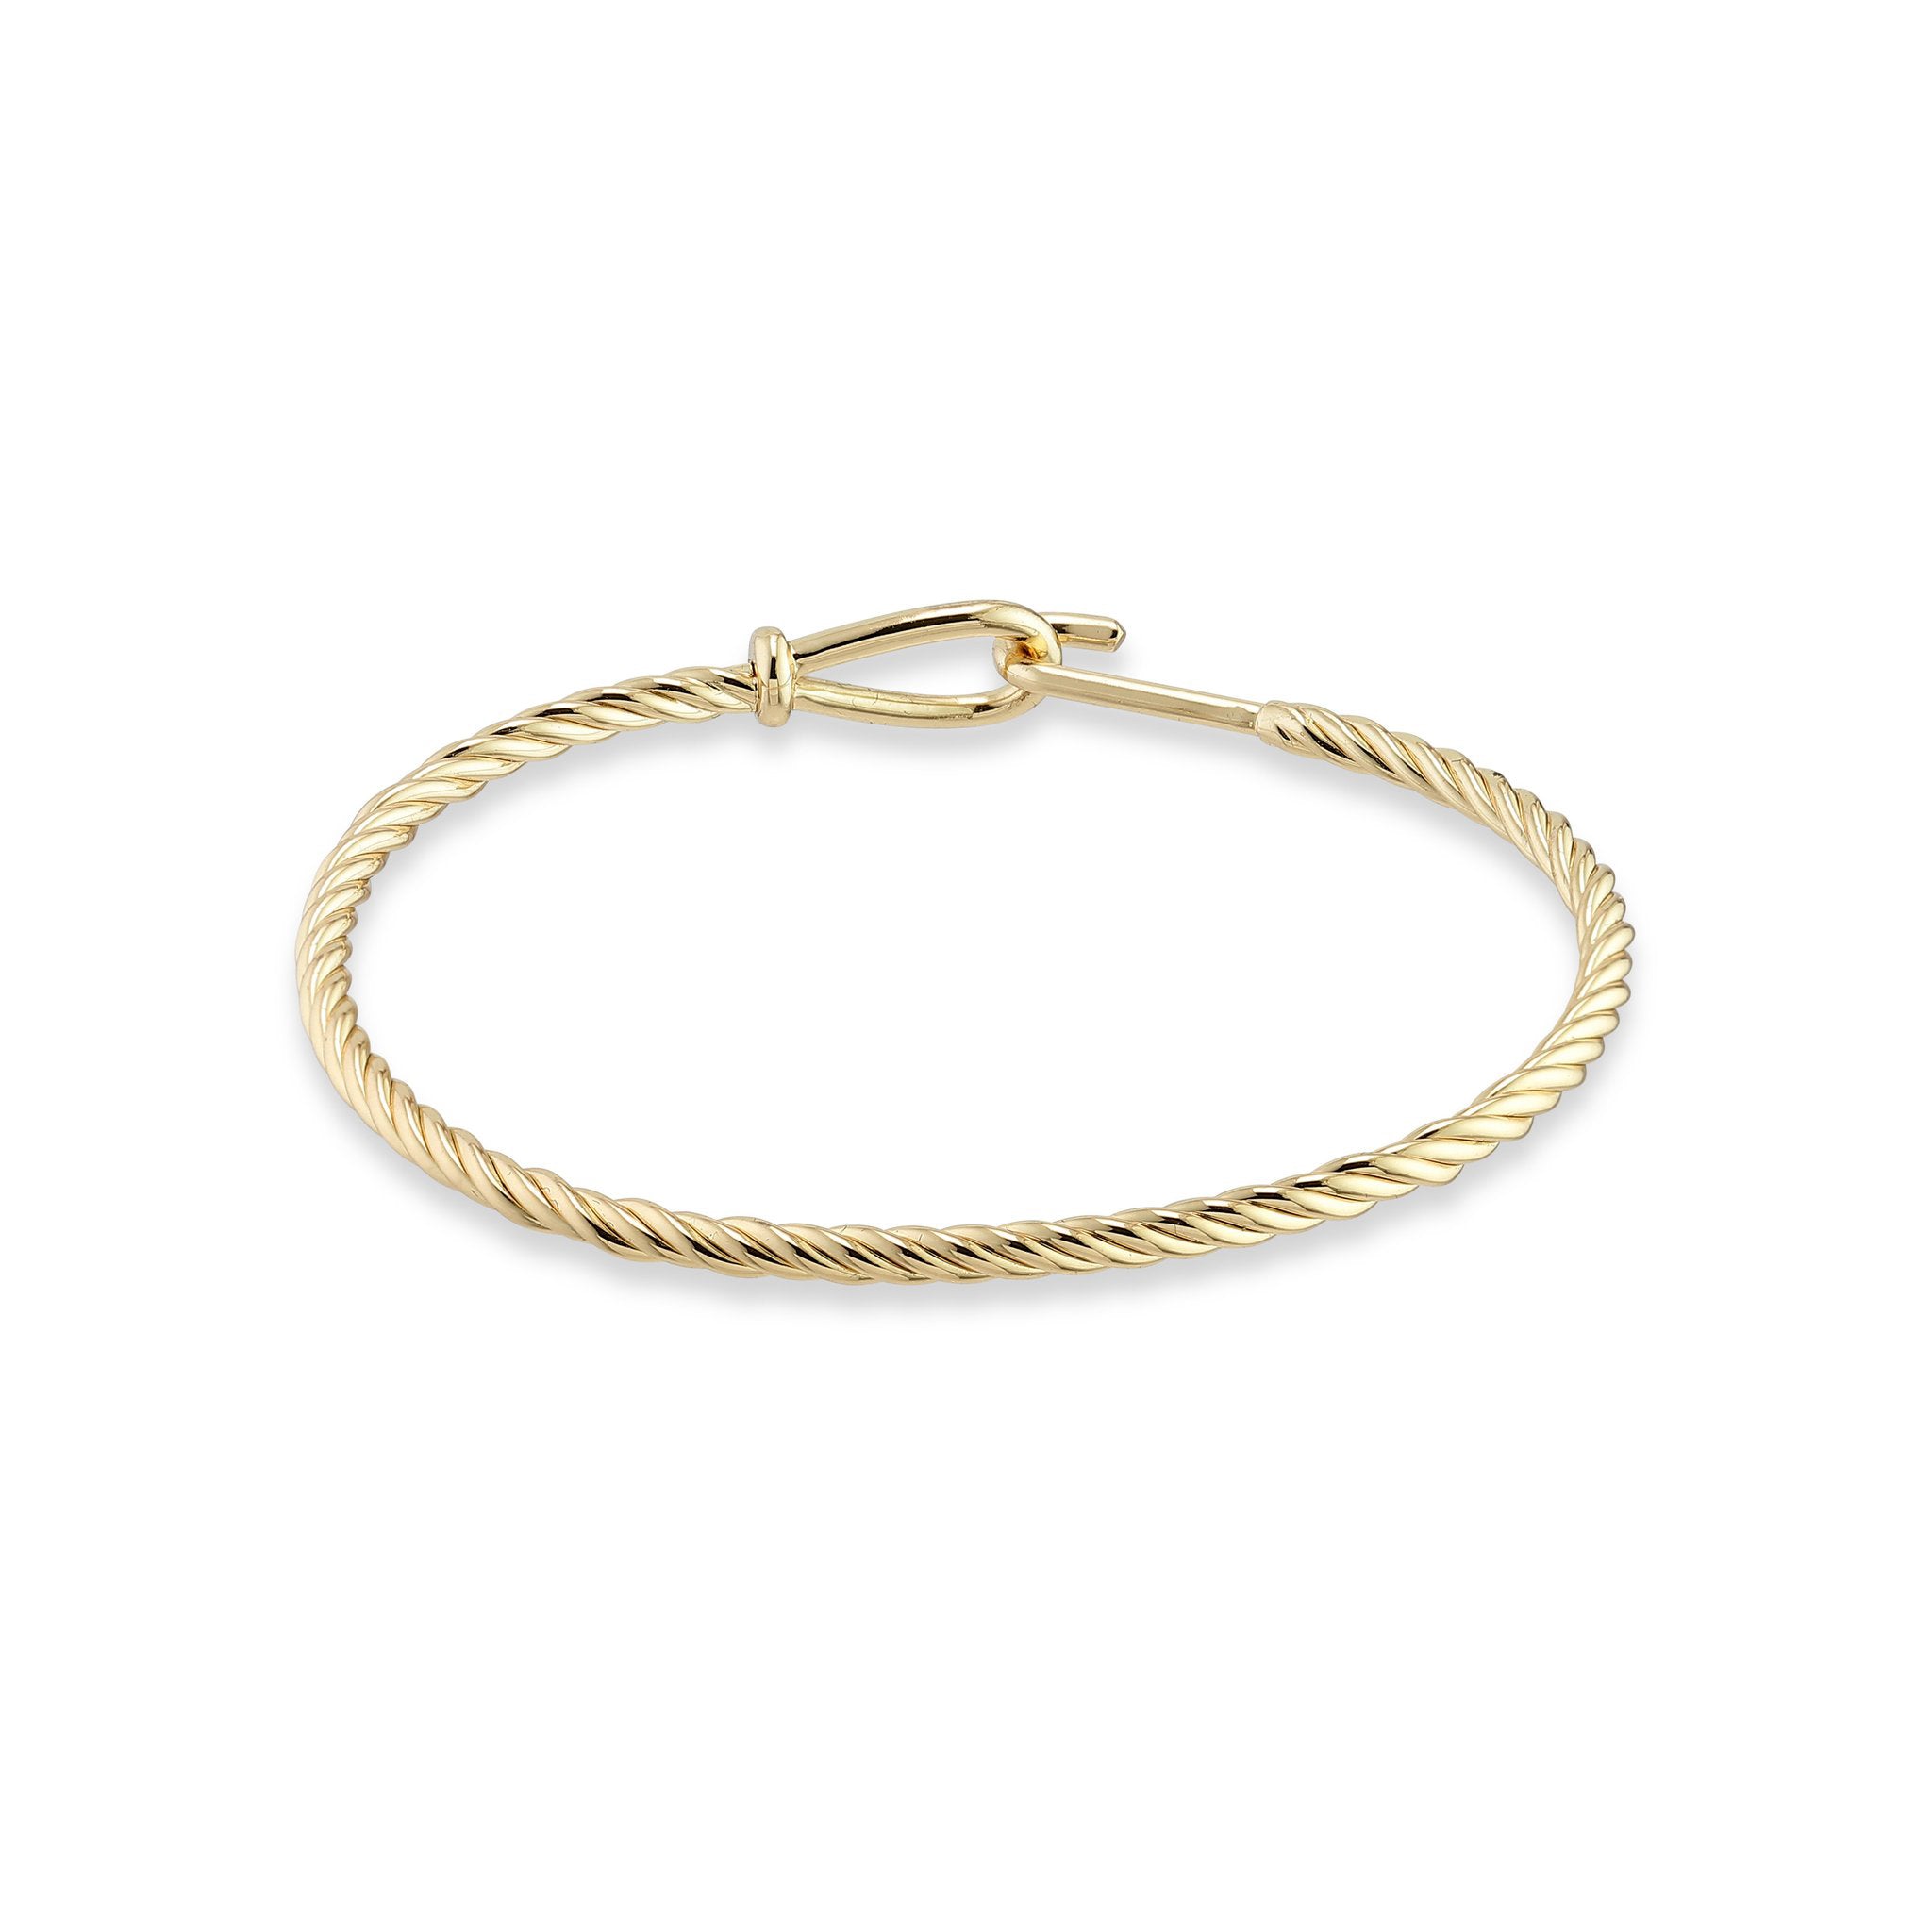 Twist gold-plated bracelet